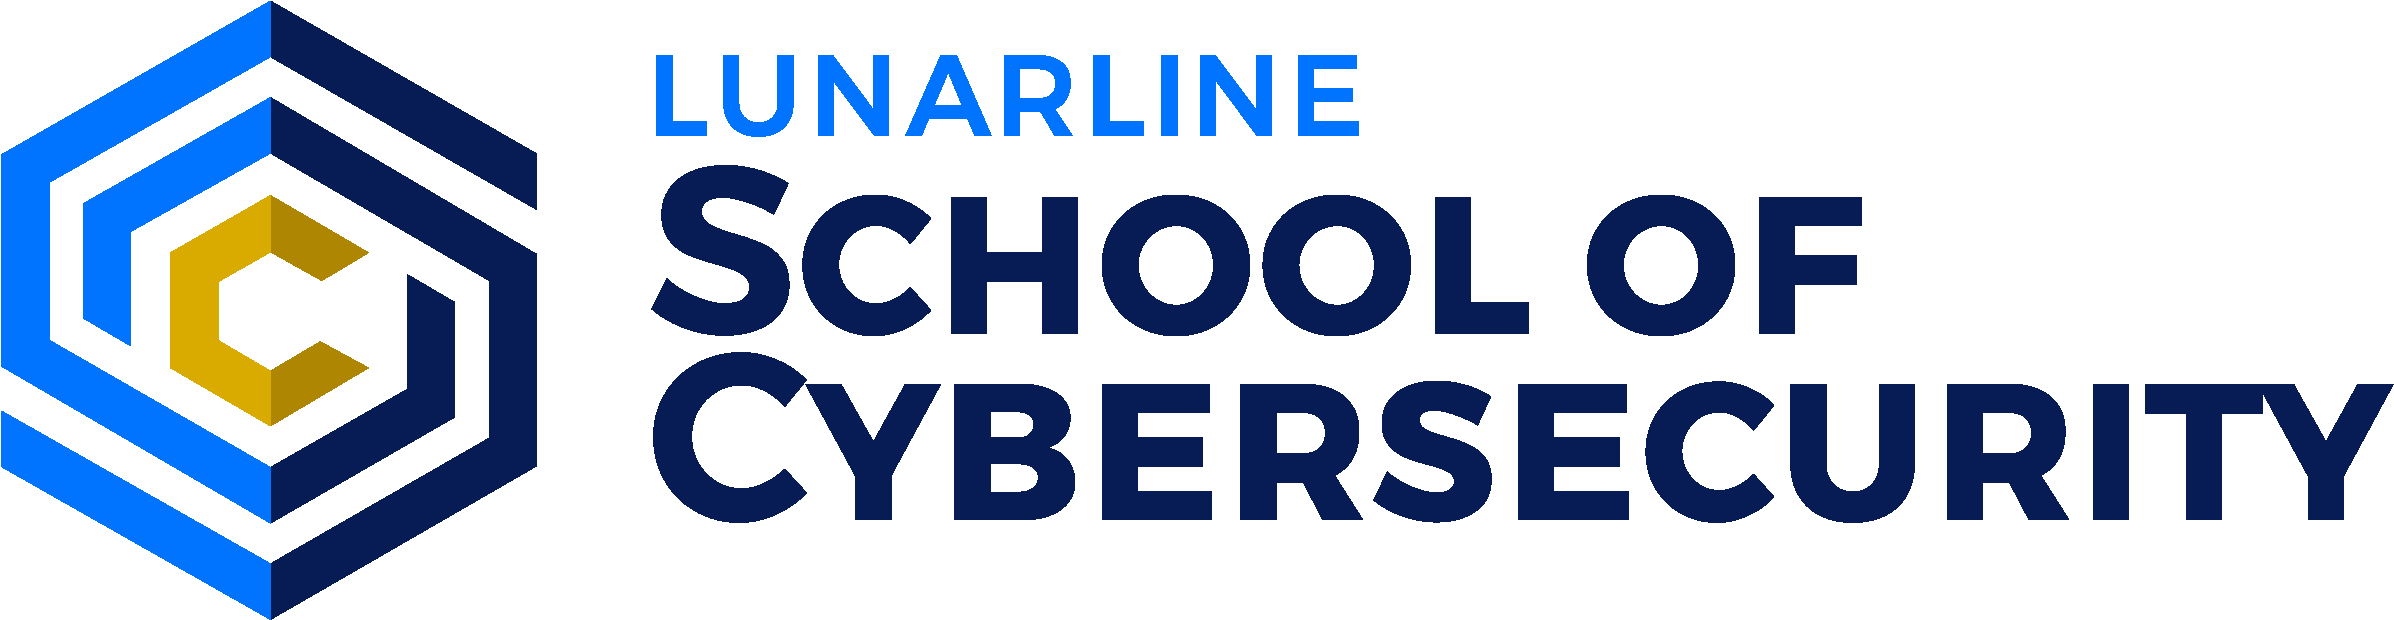 Cybersecurity School (2458x671), Png Download